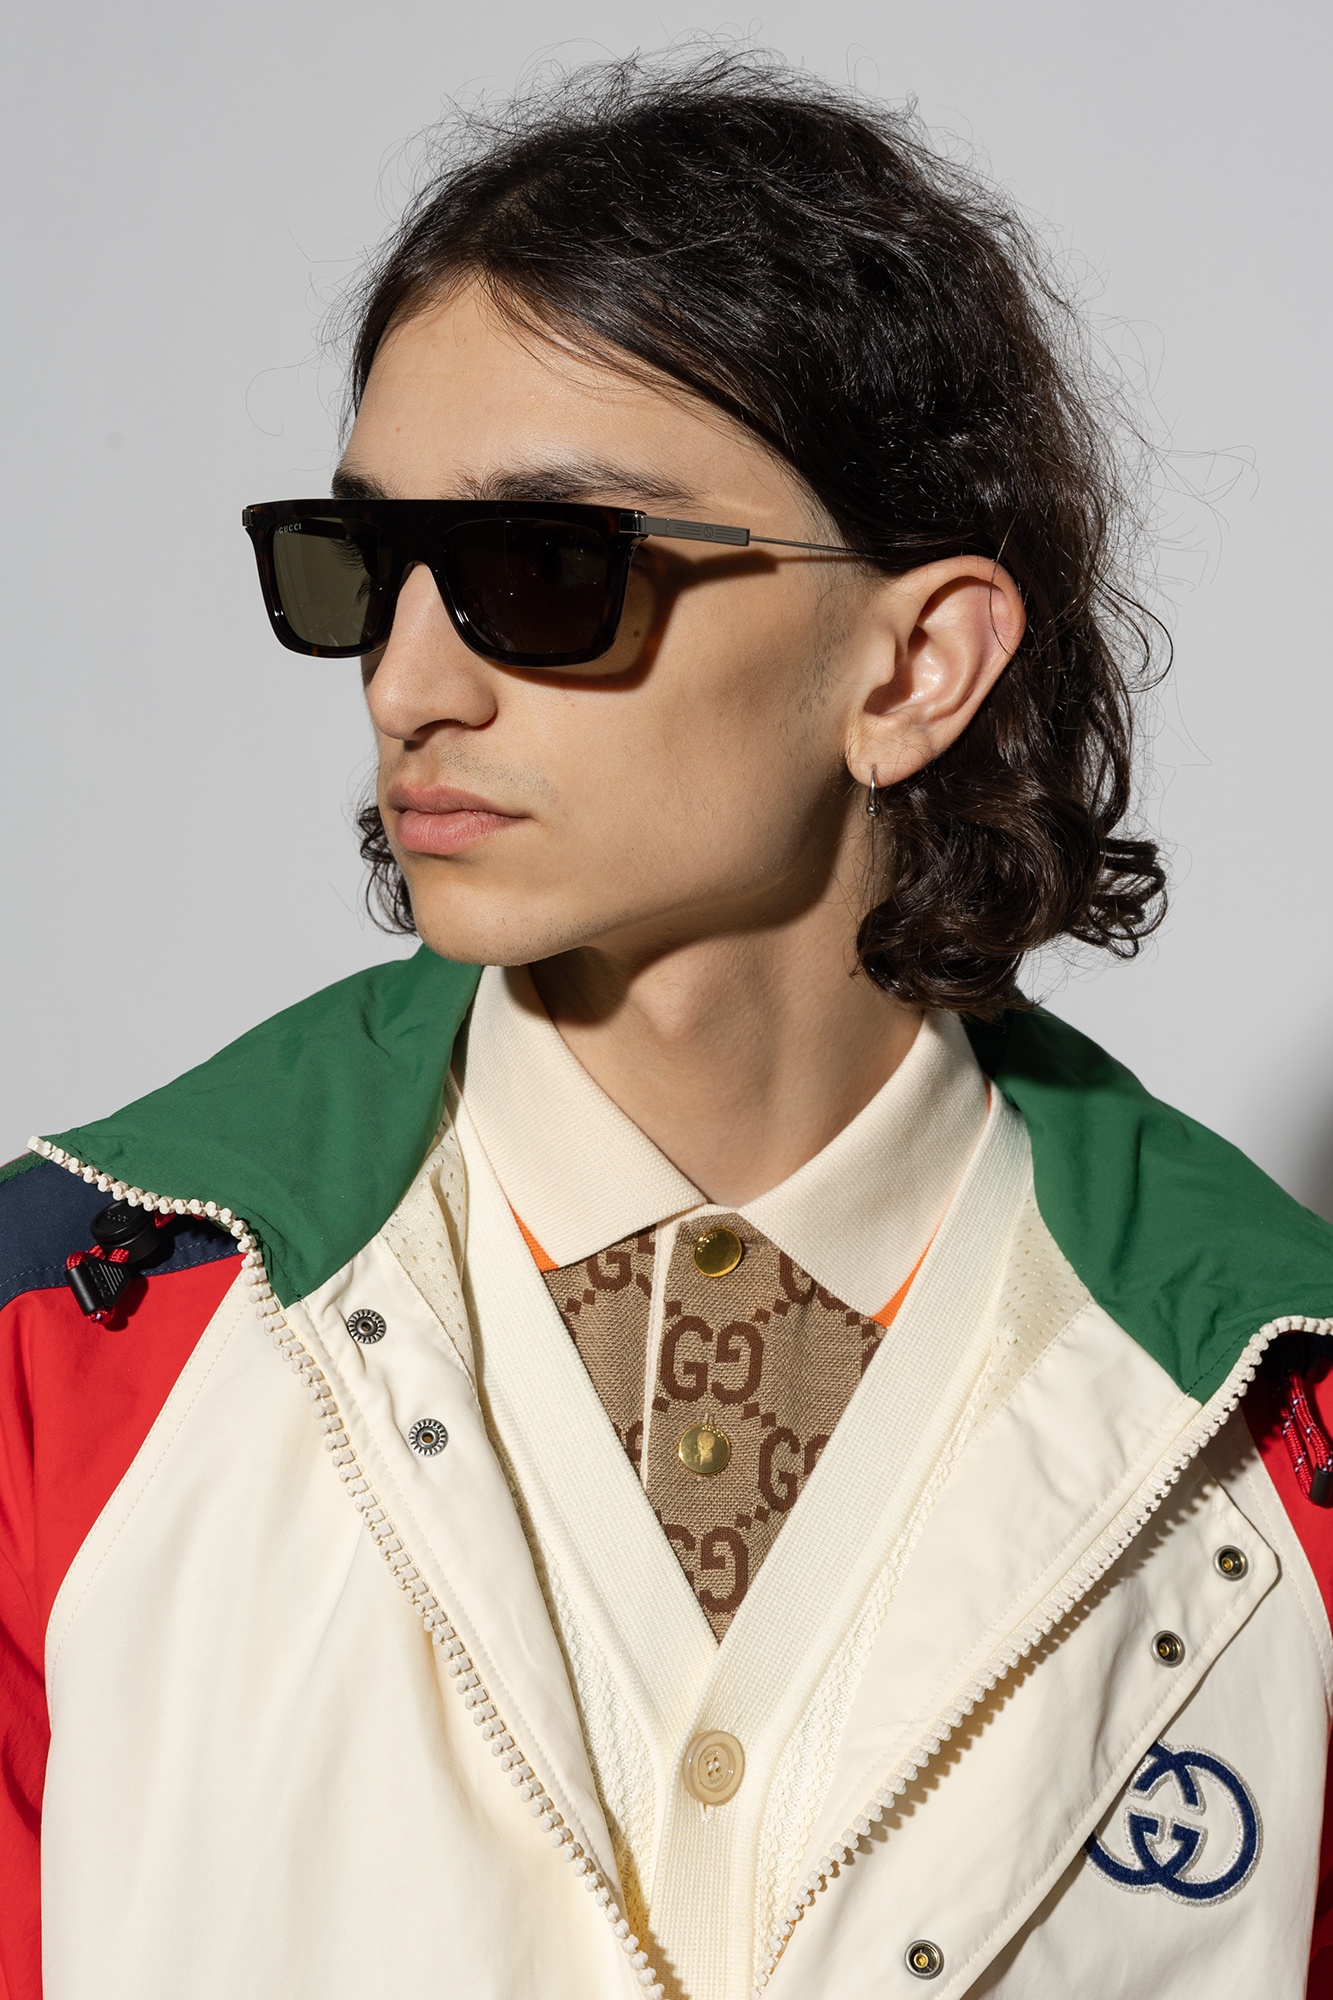 Gucci sunglasses ARR with logo